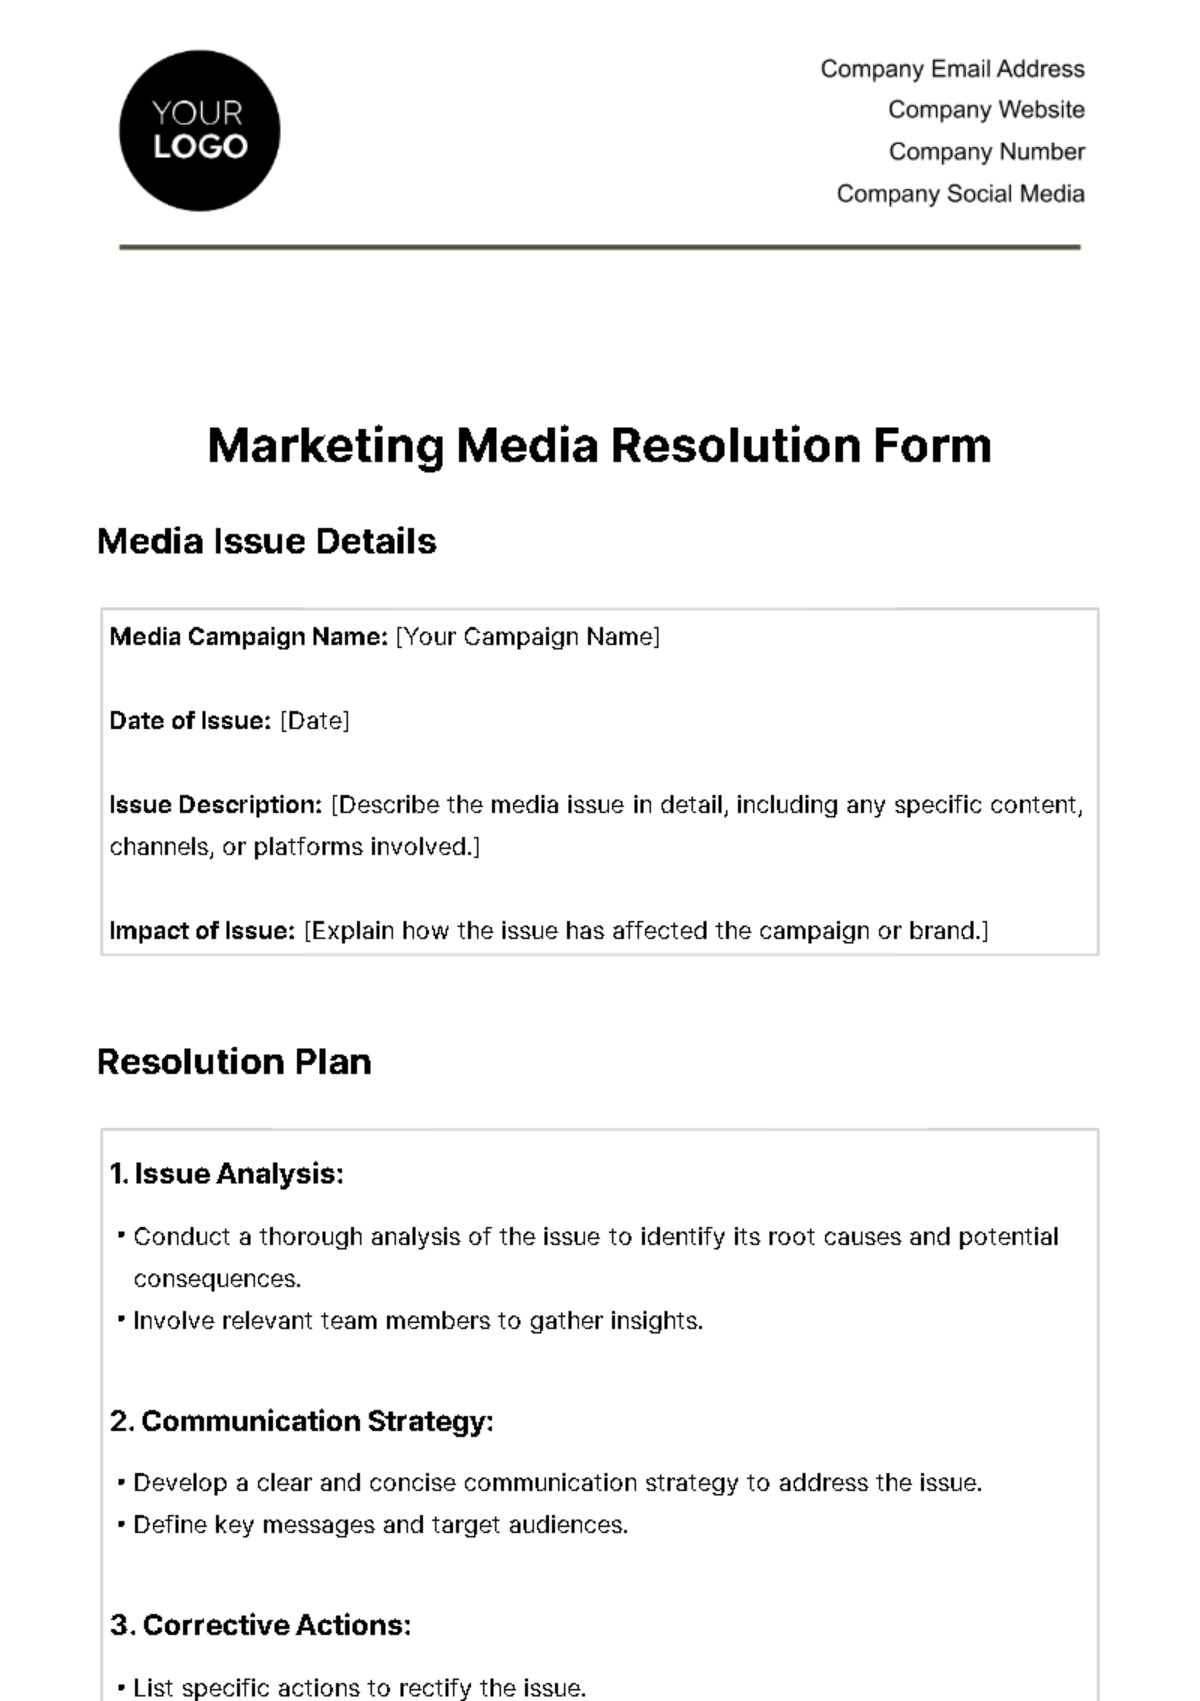 Marketing Media Resolution Form Template